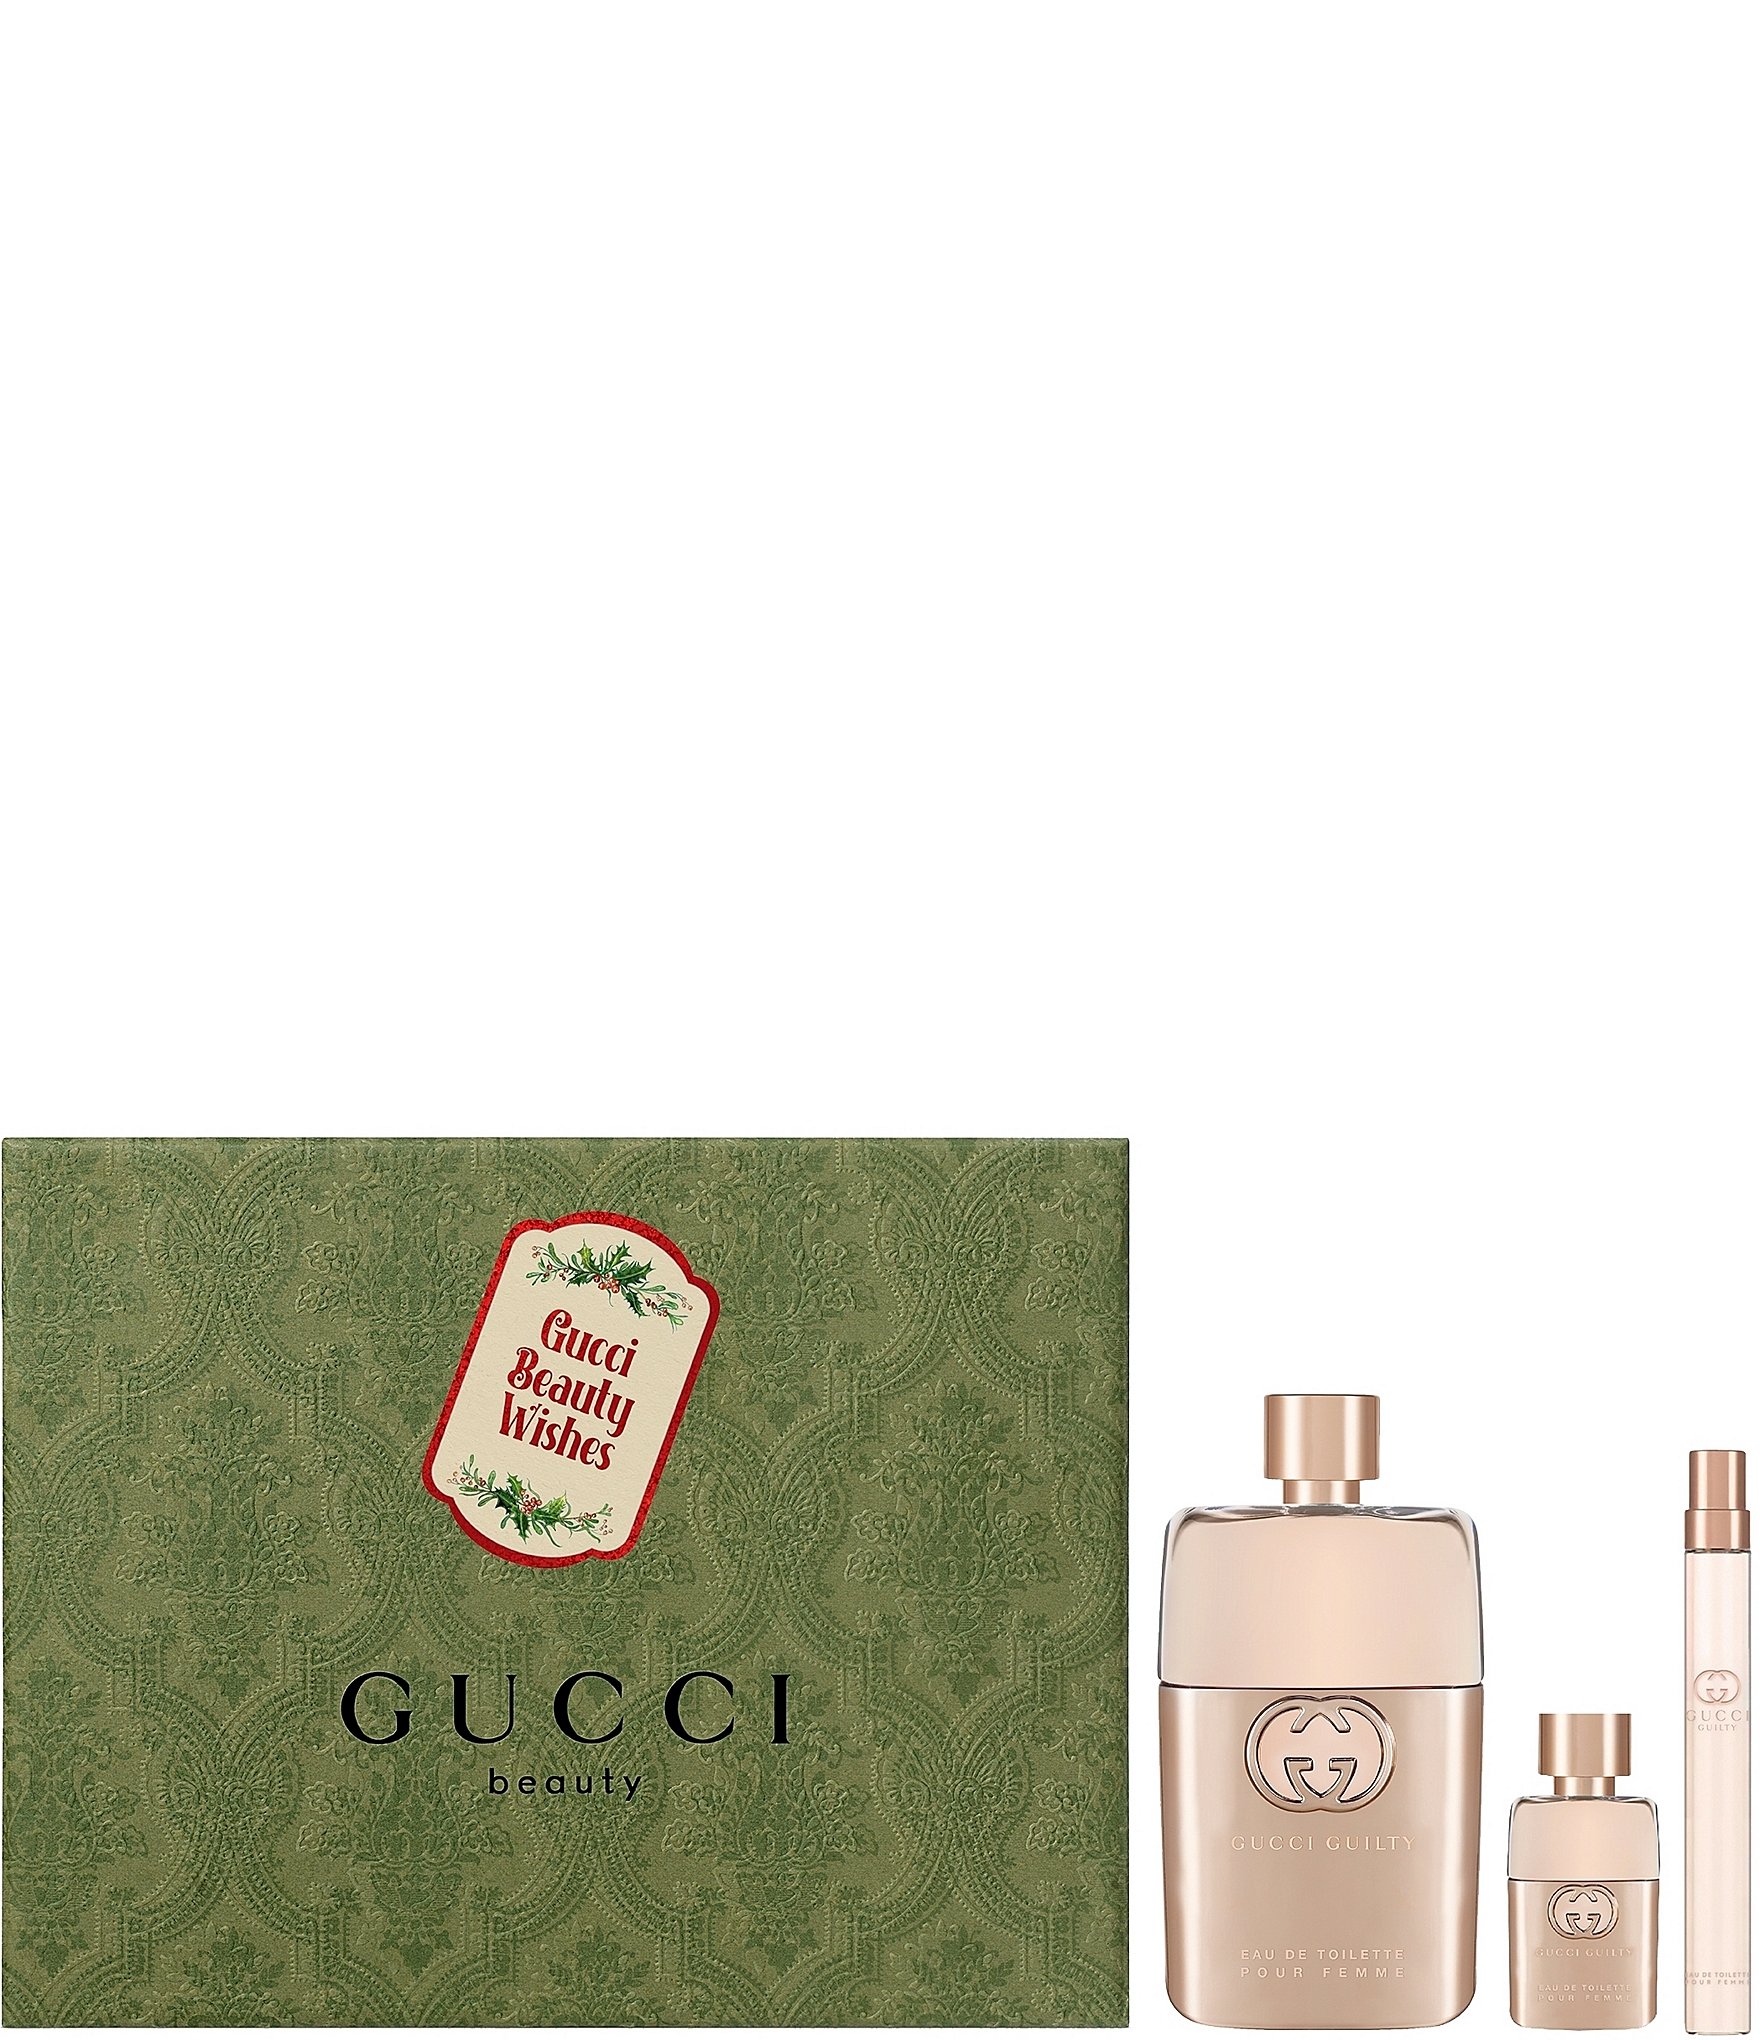 GUCCI Guilty Pour Homme EdP Set 65 ml - Perfume Gift Set | Alza.cz